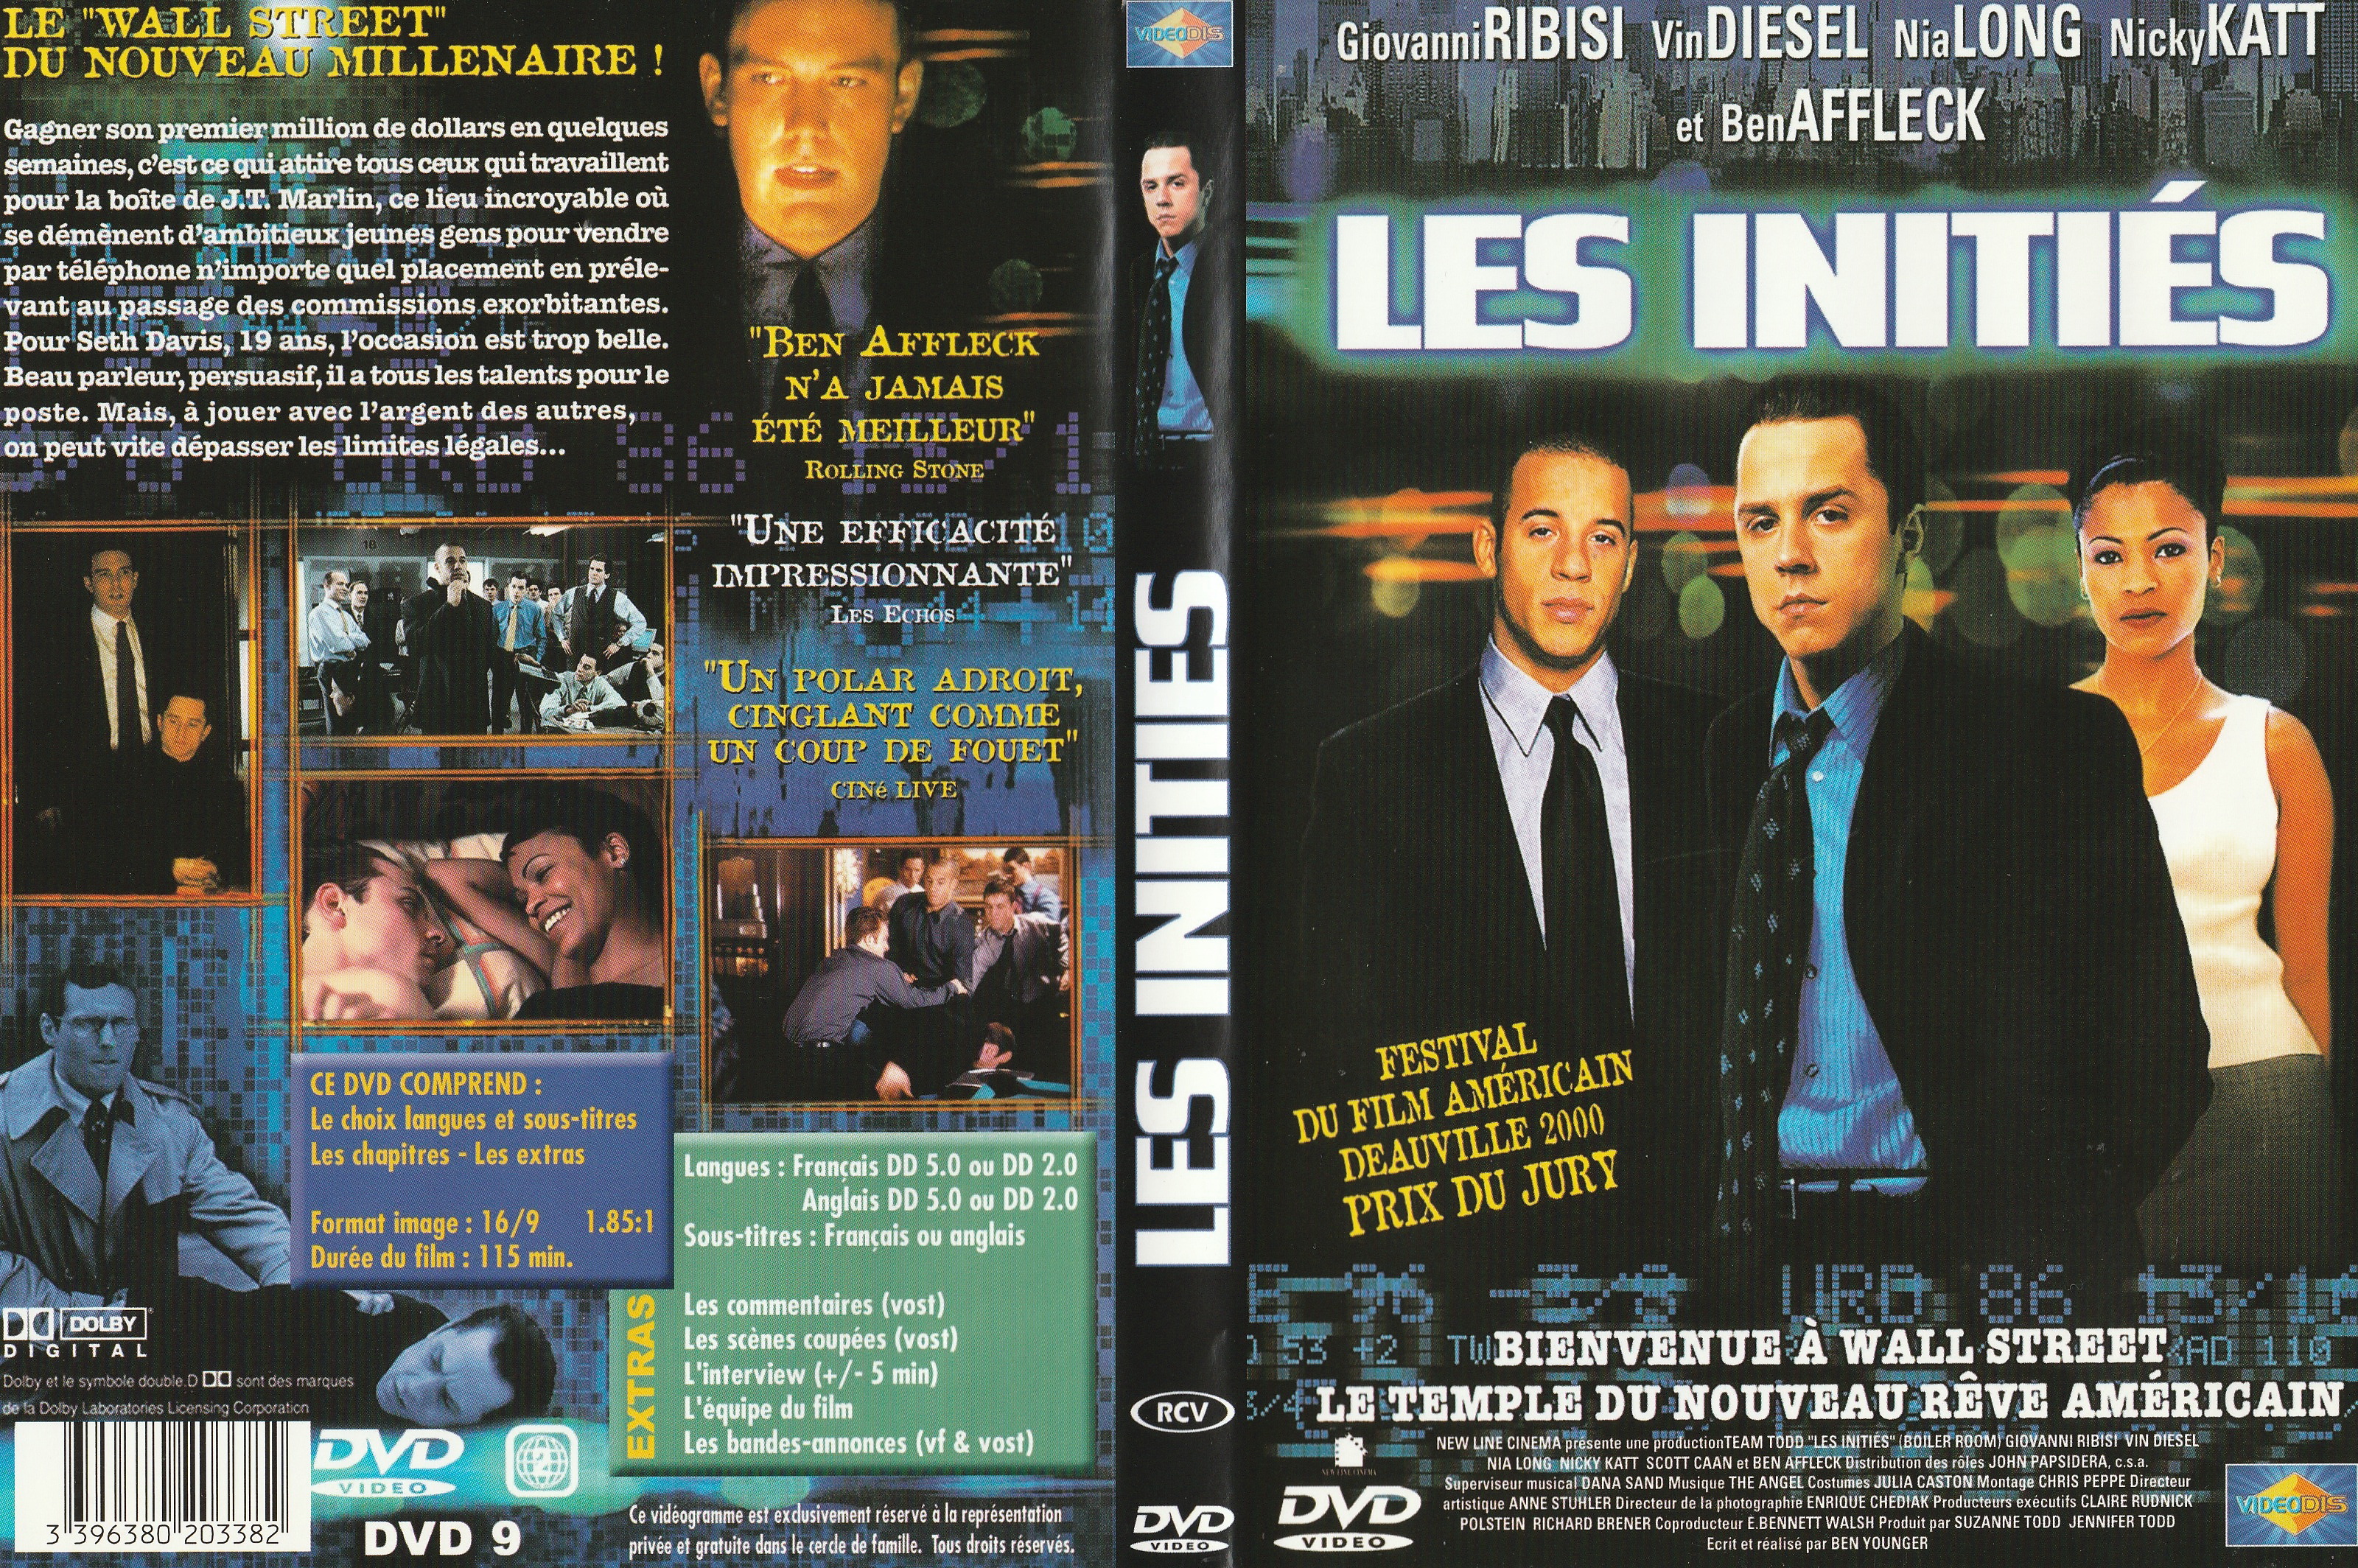 Jaquette DVD Les initis v2